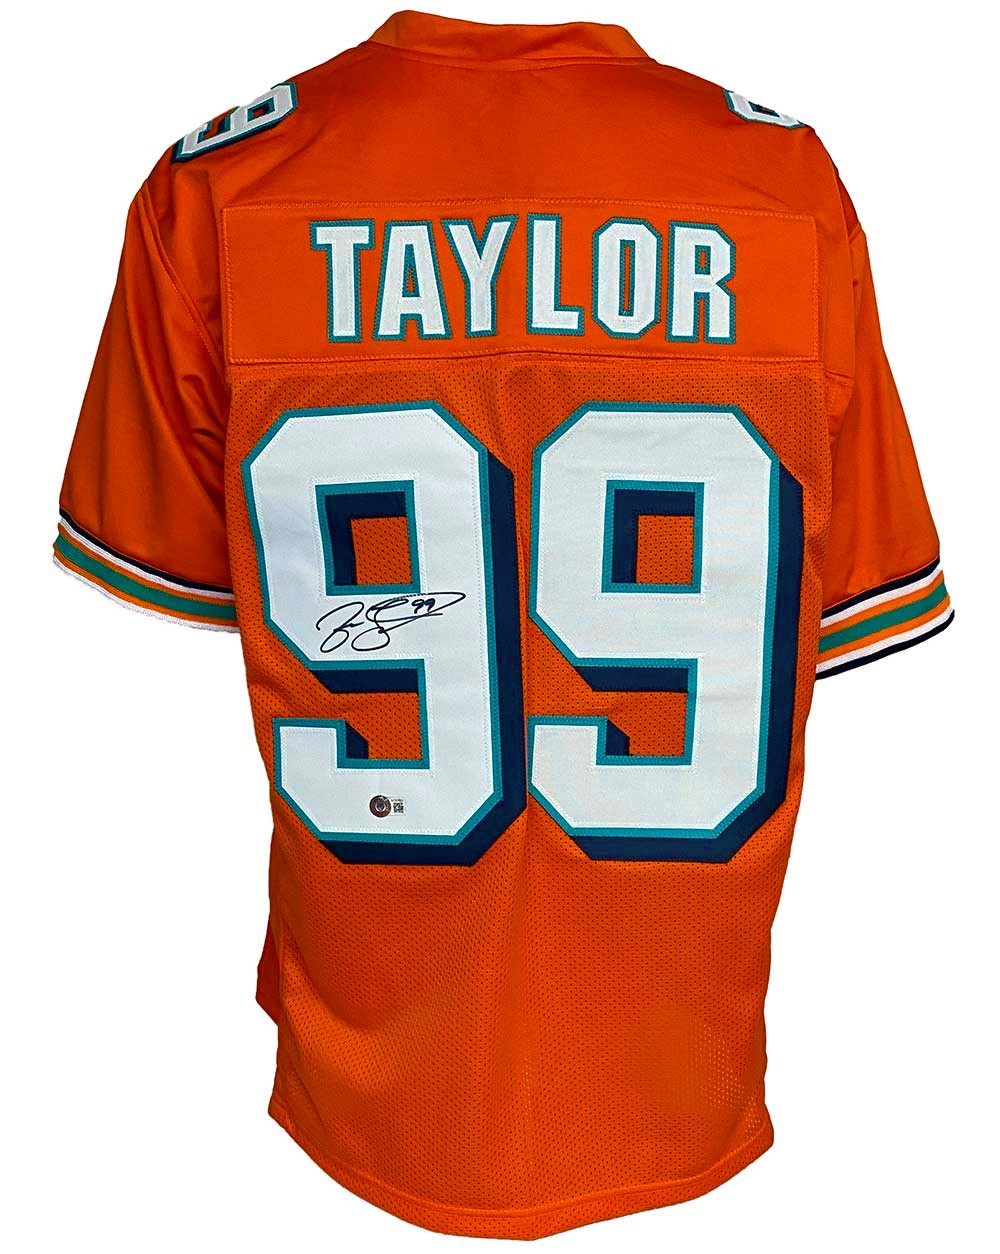 Miami Dolphins Jason Taylor Autographed Pro Style Orange Jersey